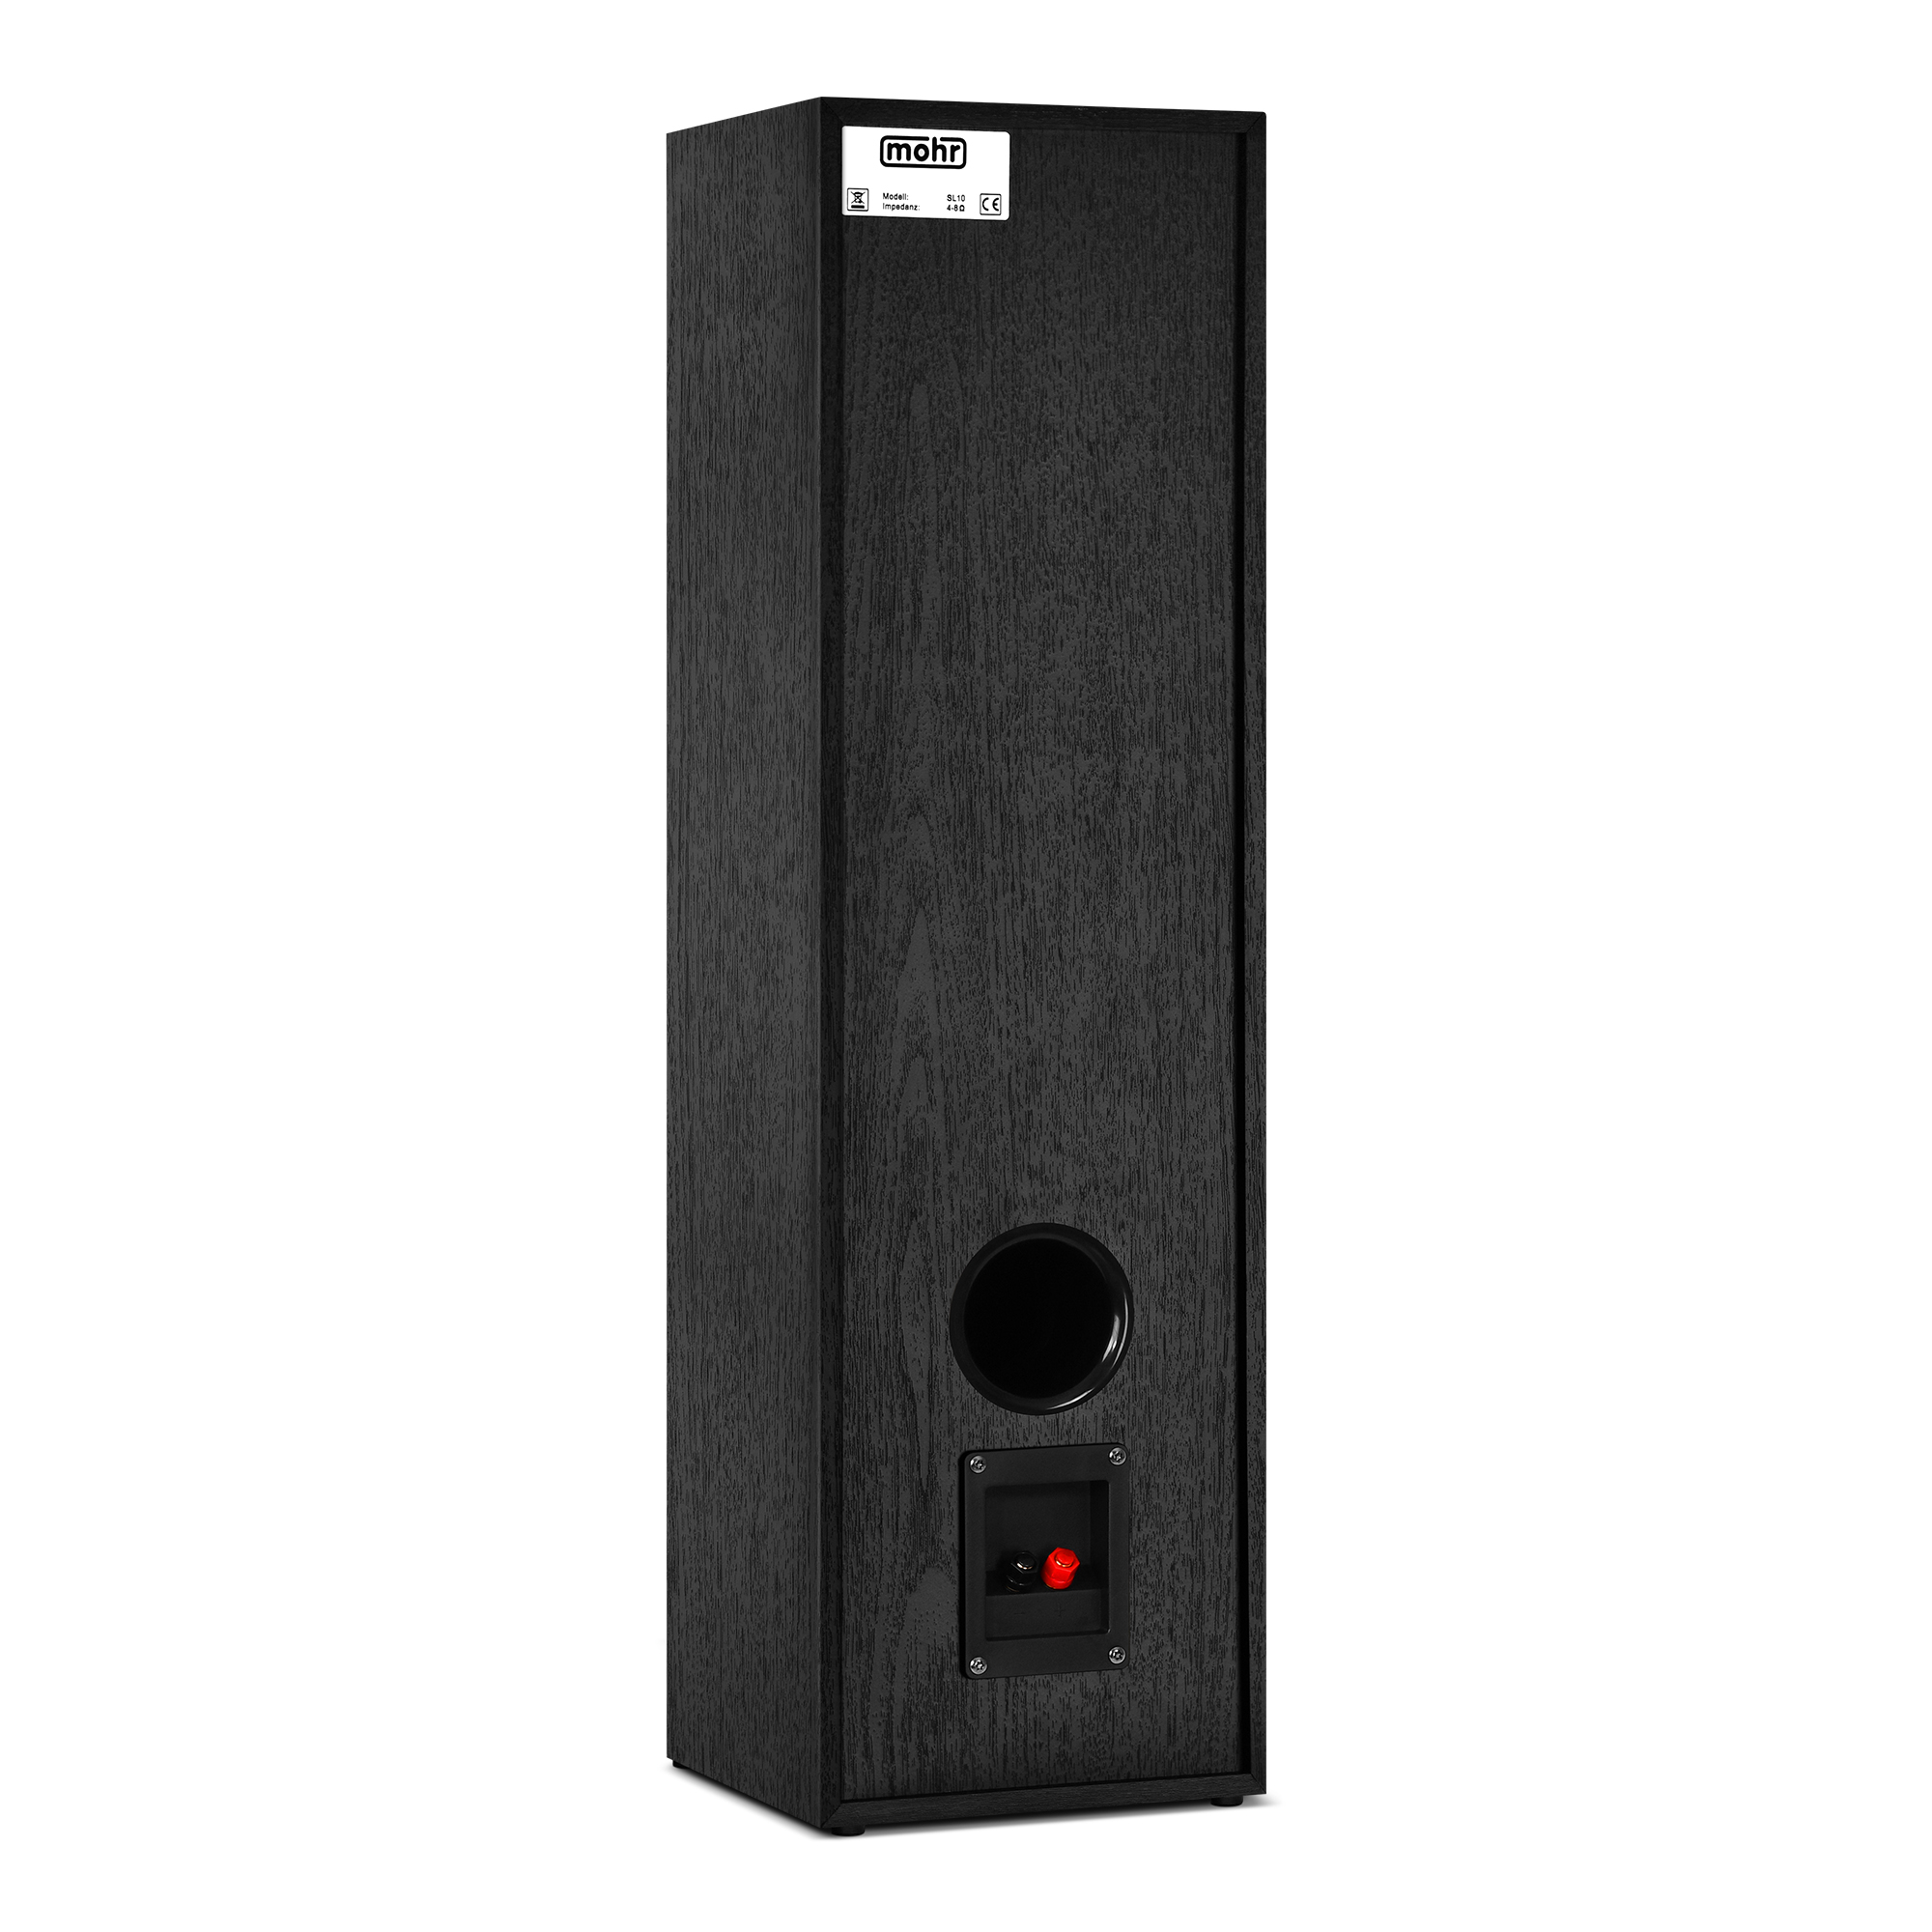 MOHR SL10, 1 2-Wege Paar, HiFi schwarz schwarz Standautsprecher Stereo HiFi passiver Bass-Reflex, Standlautsprecher